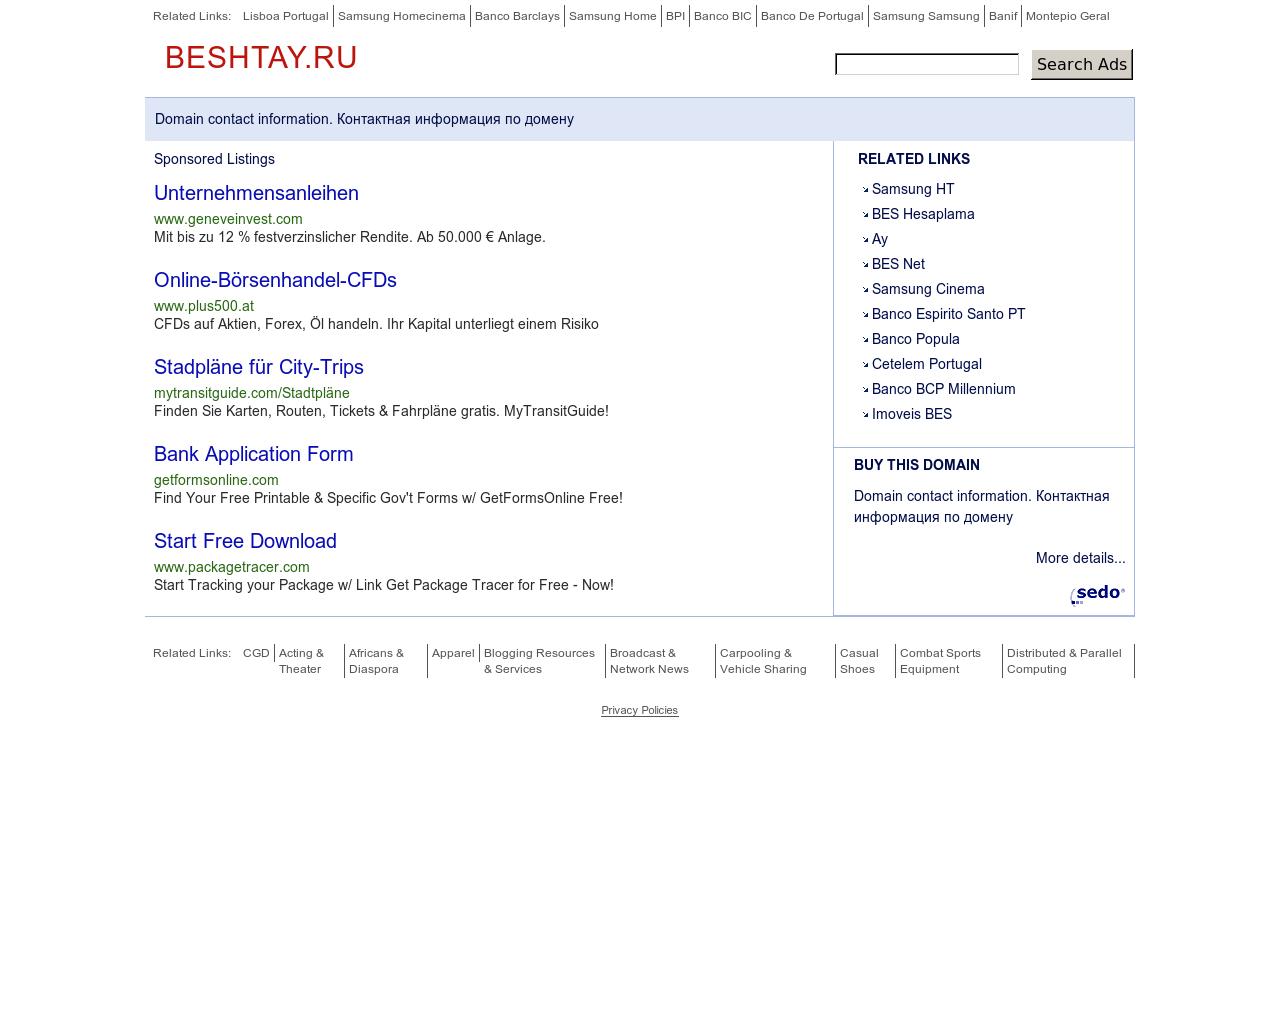 Изображение сайта beshtay.ru в разрешении 1280x1024